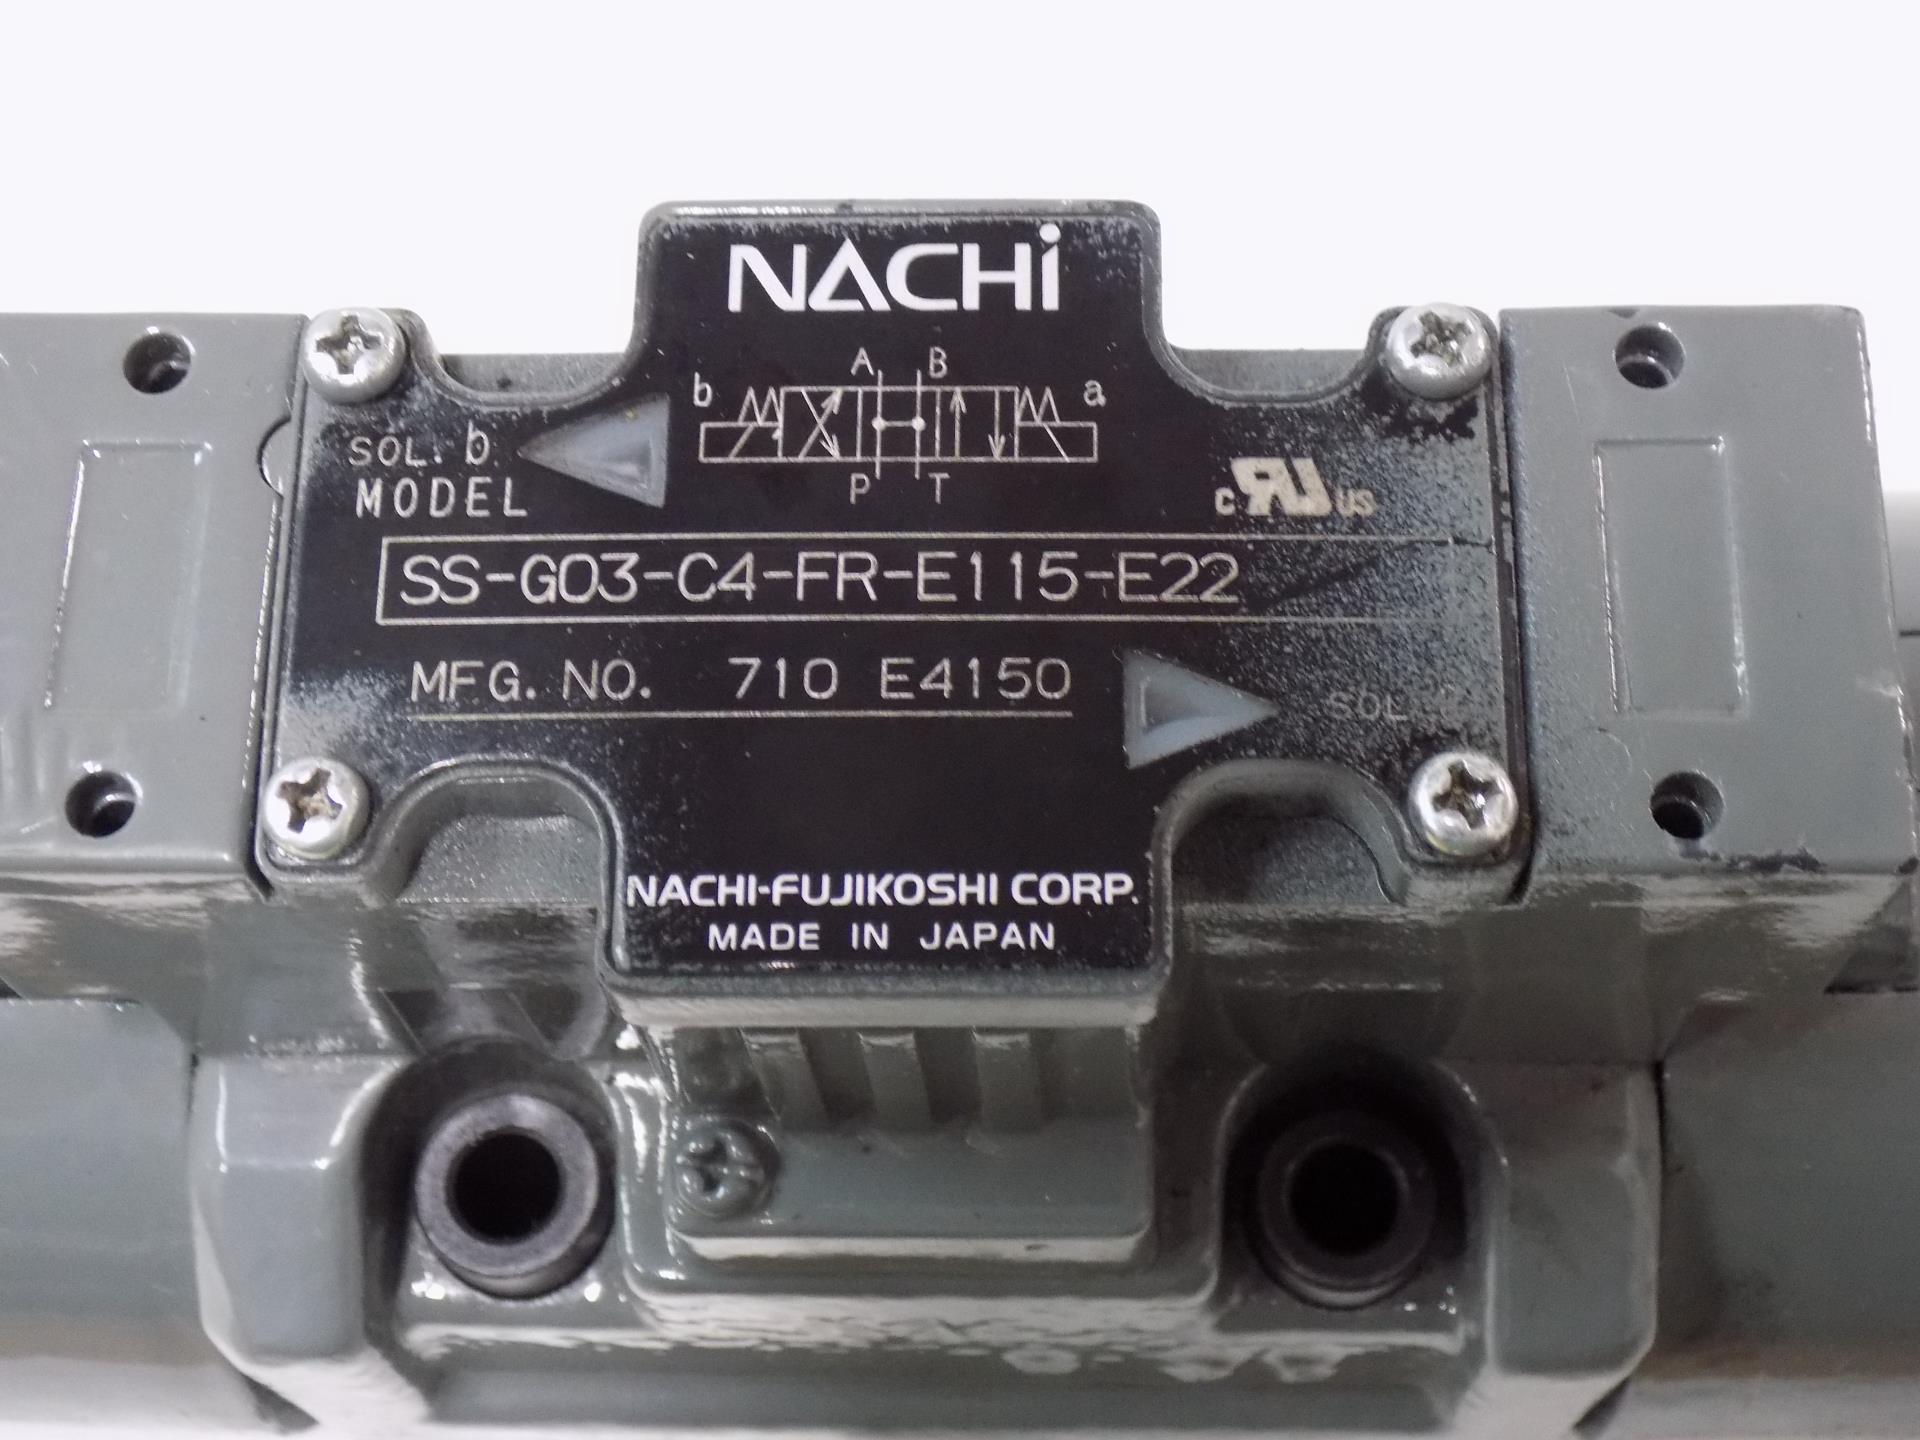 NACHI HYDRAULIC DIRECTIONAL CONTROL VALVE SS-G03-C4-FR-E115-E22 | eBay